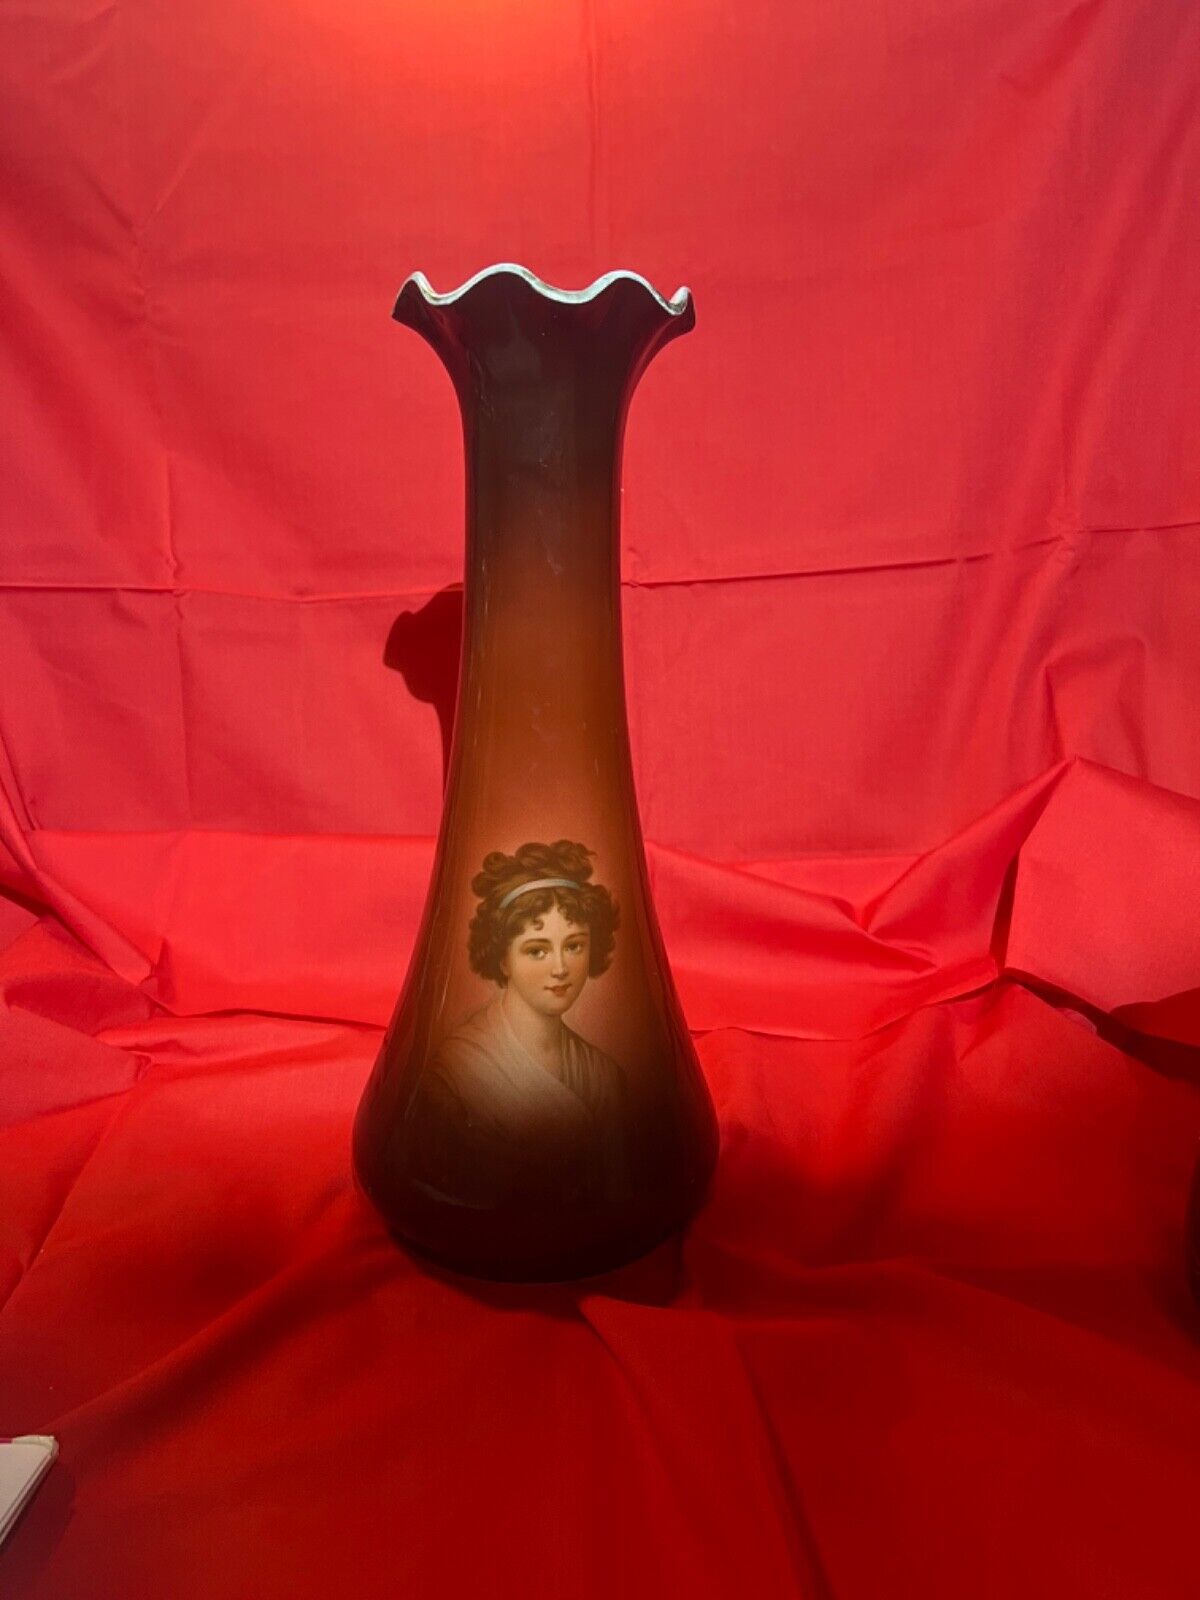 Vintage warwick IOGA vase with brunette youg woman on front